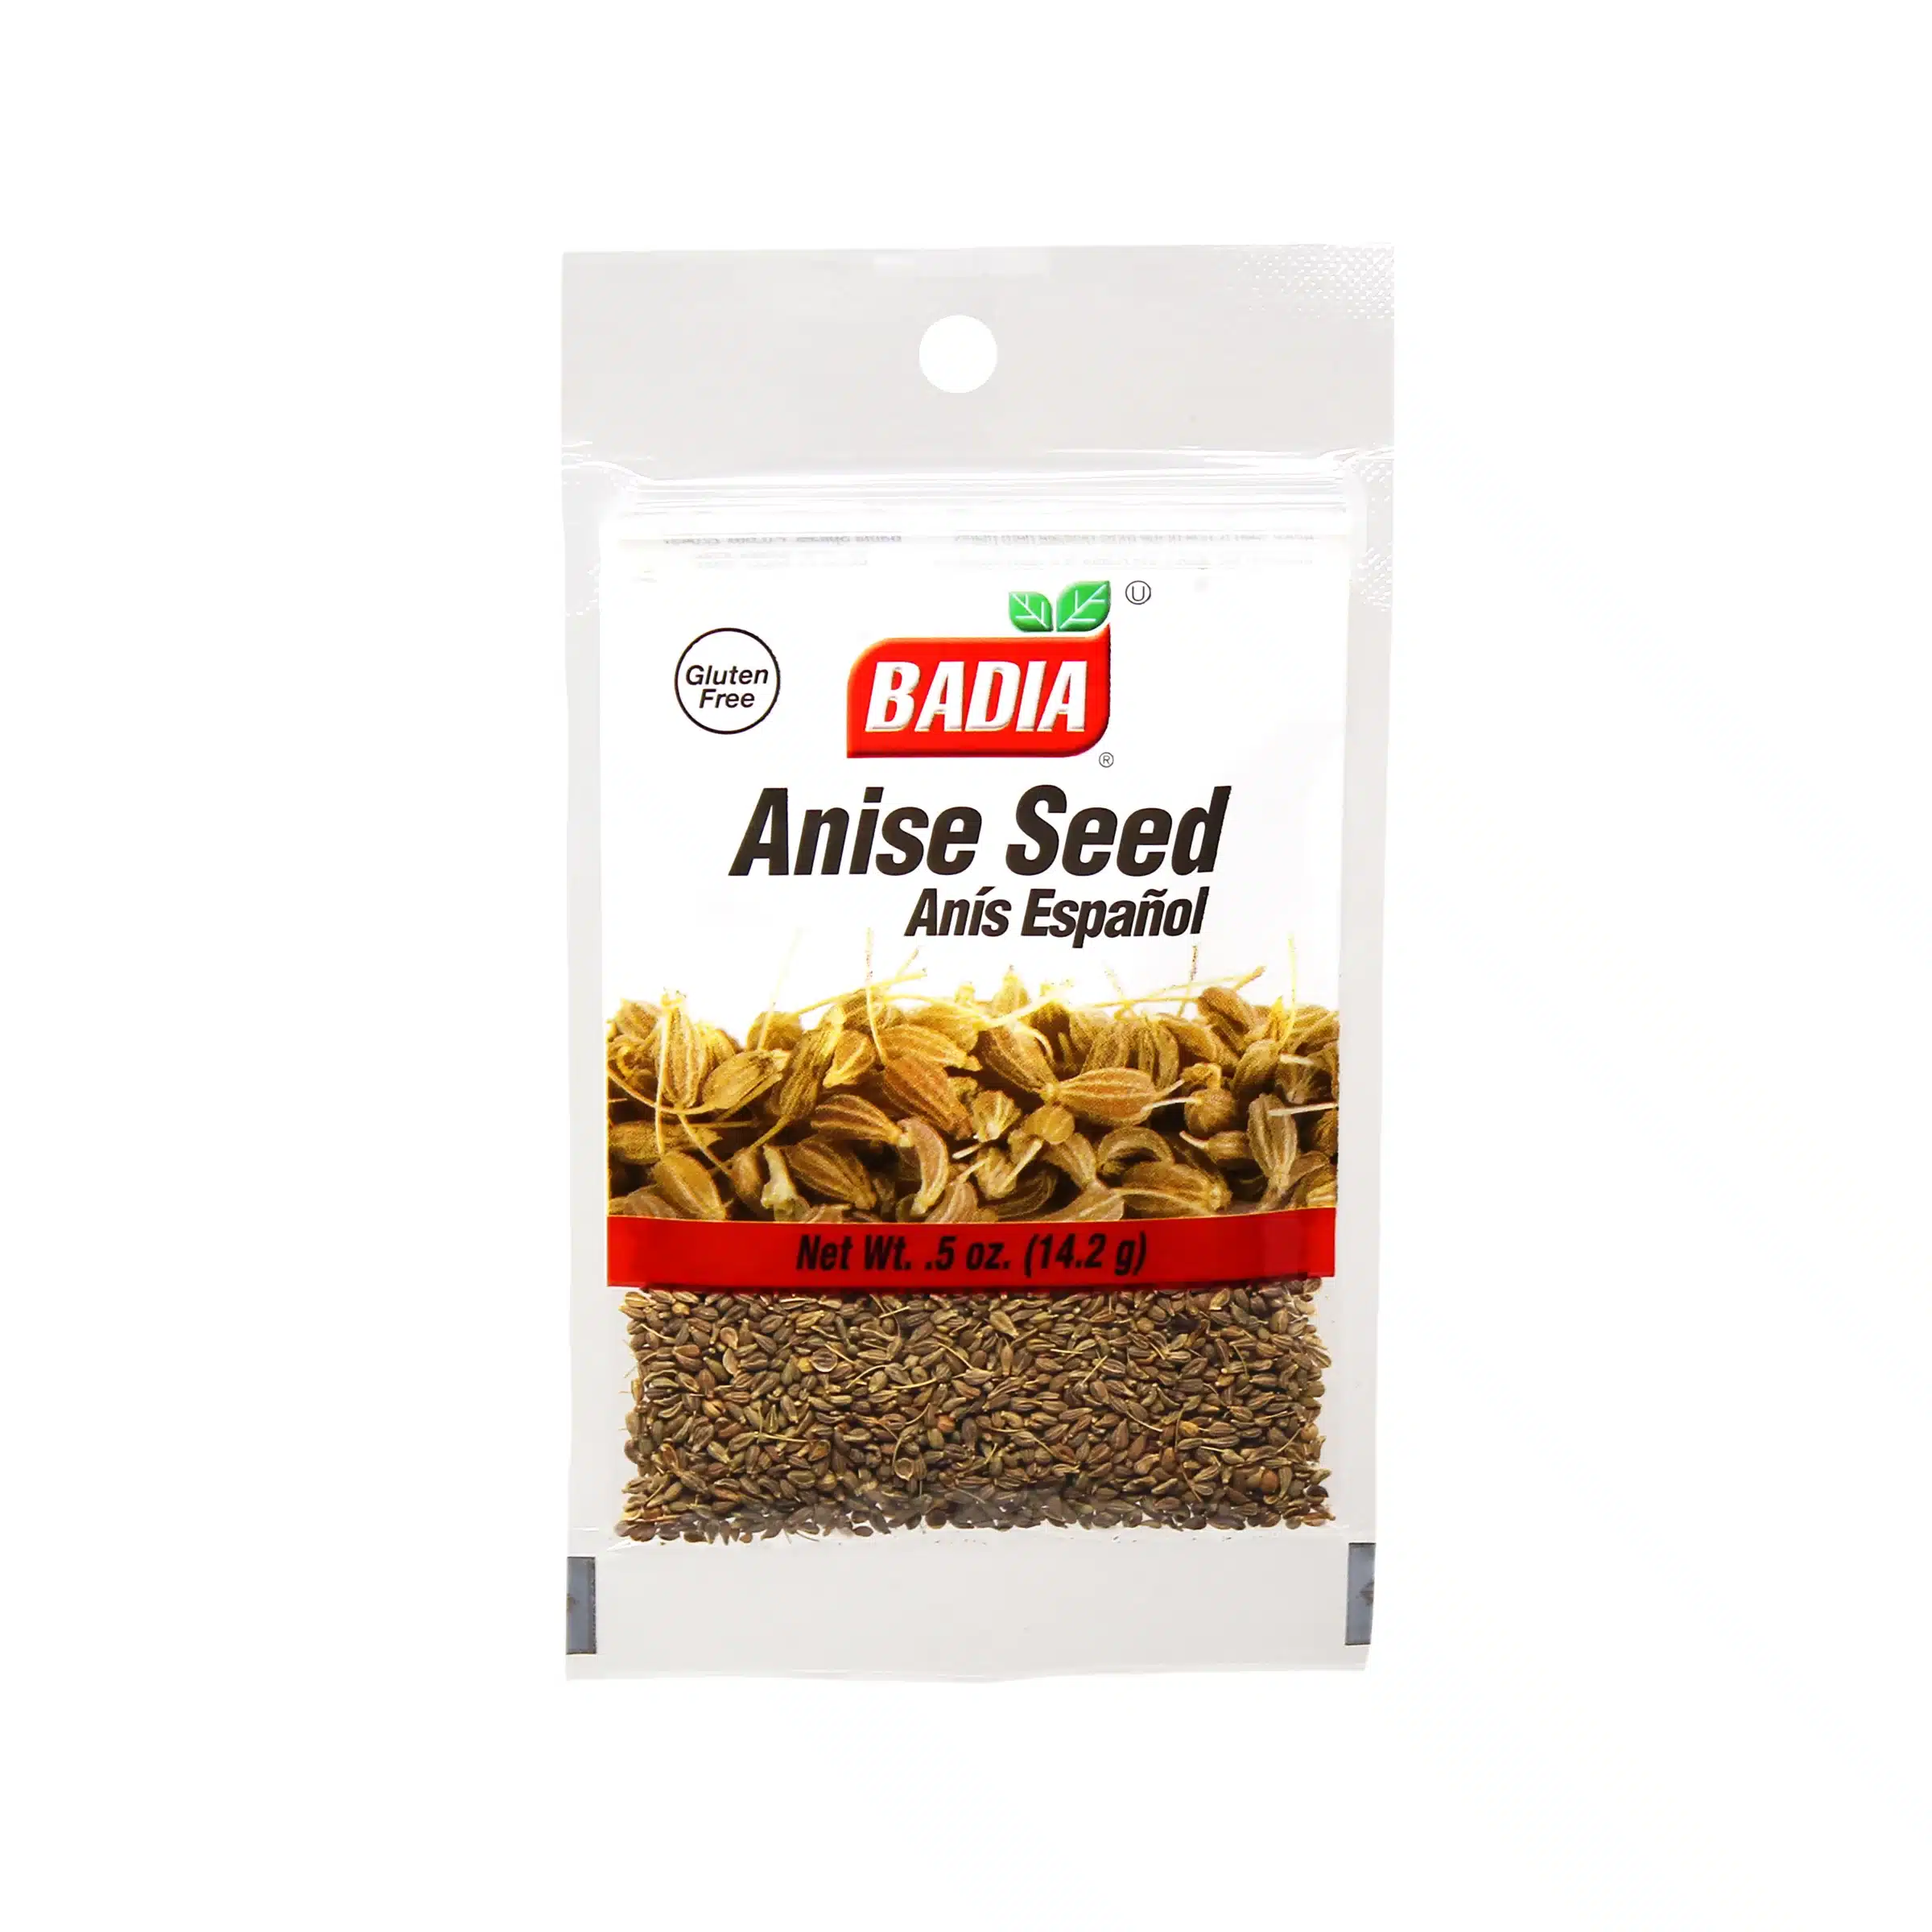 Badia Spices - Complete Seasoning 12 oz (Pack of 12), 12 pack - Kroger